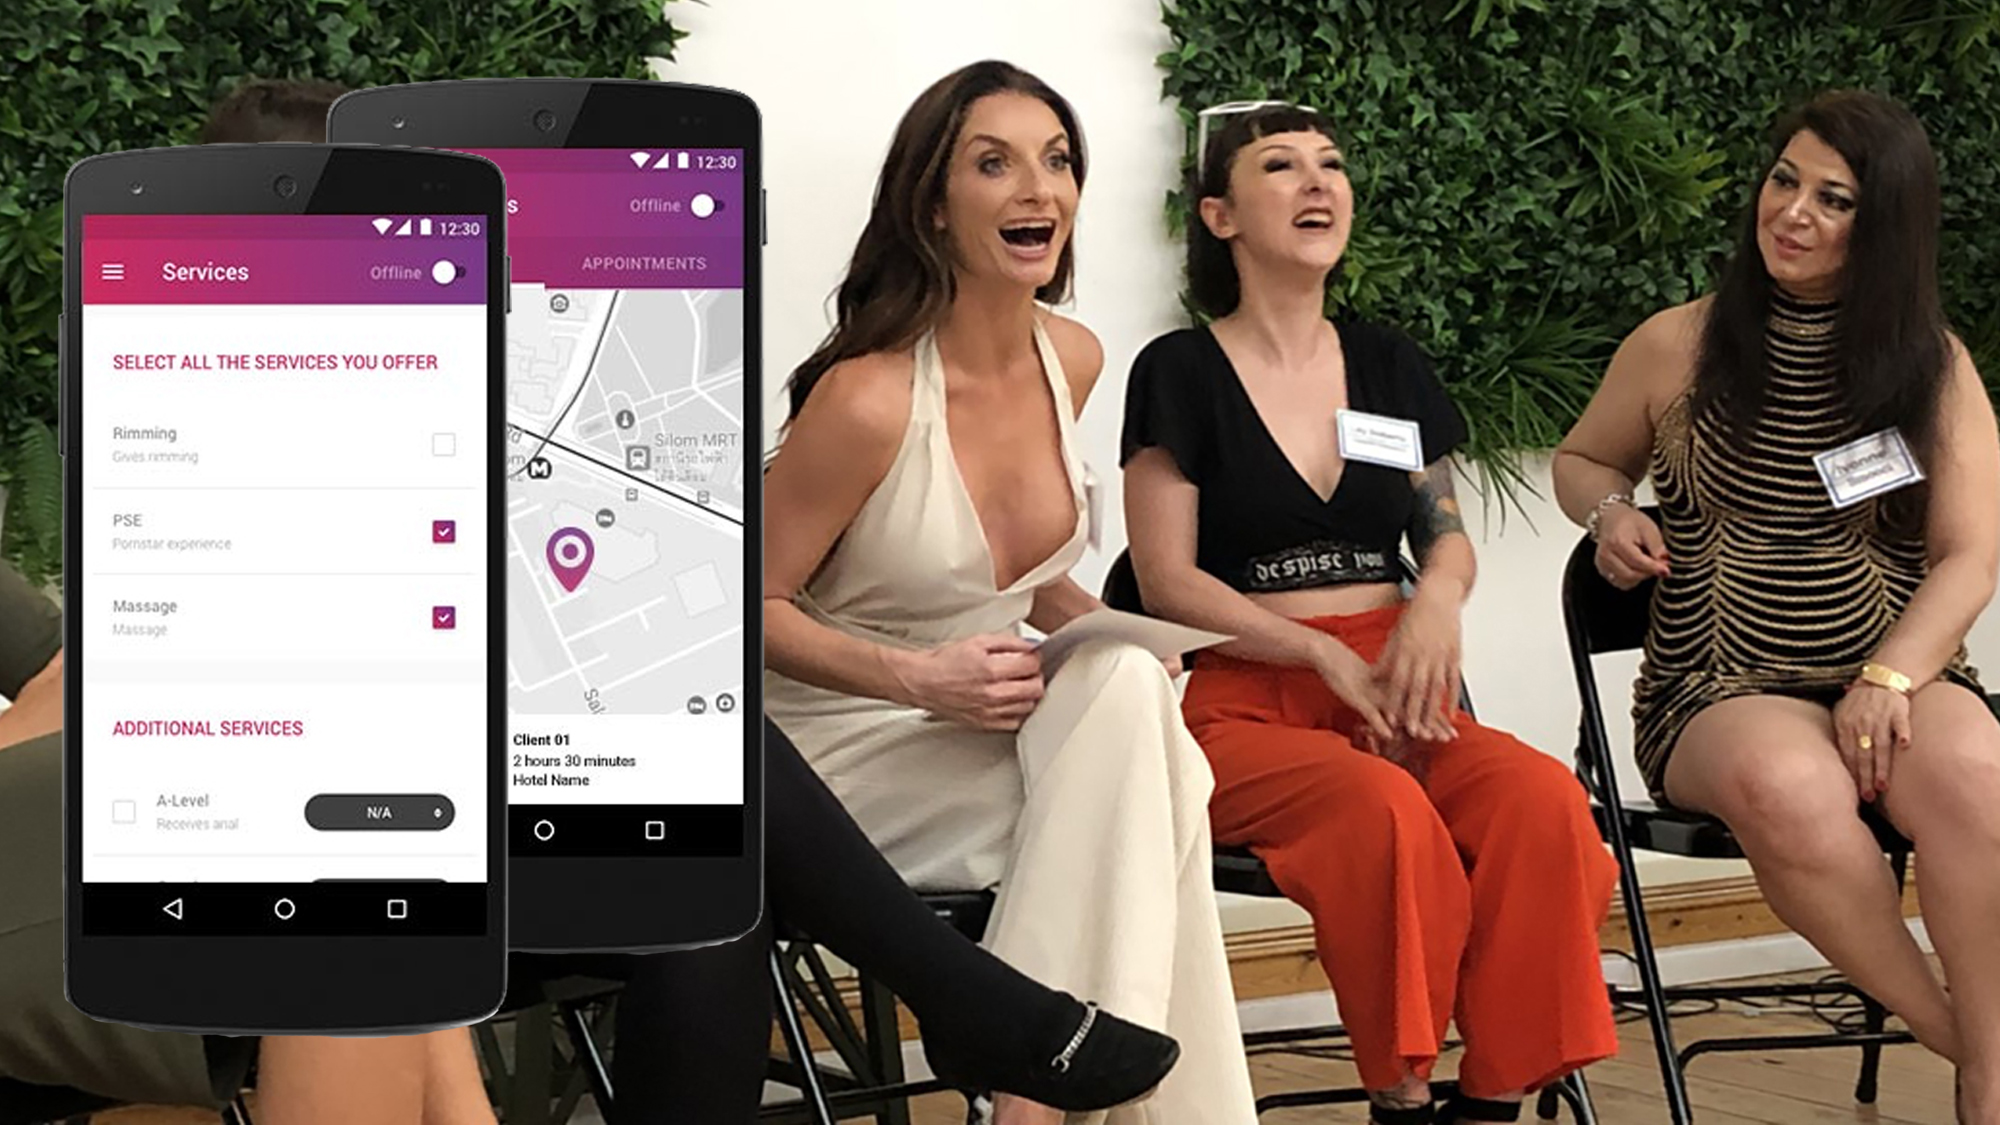 Inside Smooci, the Sex Work App Described as 'Uber for Escorts'